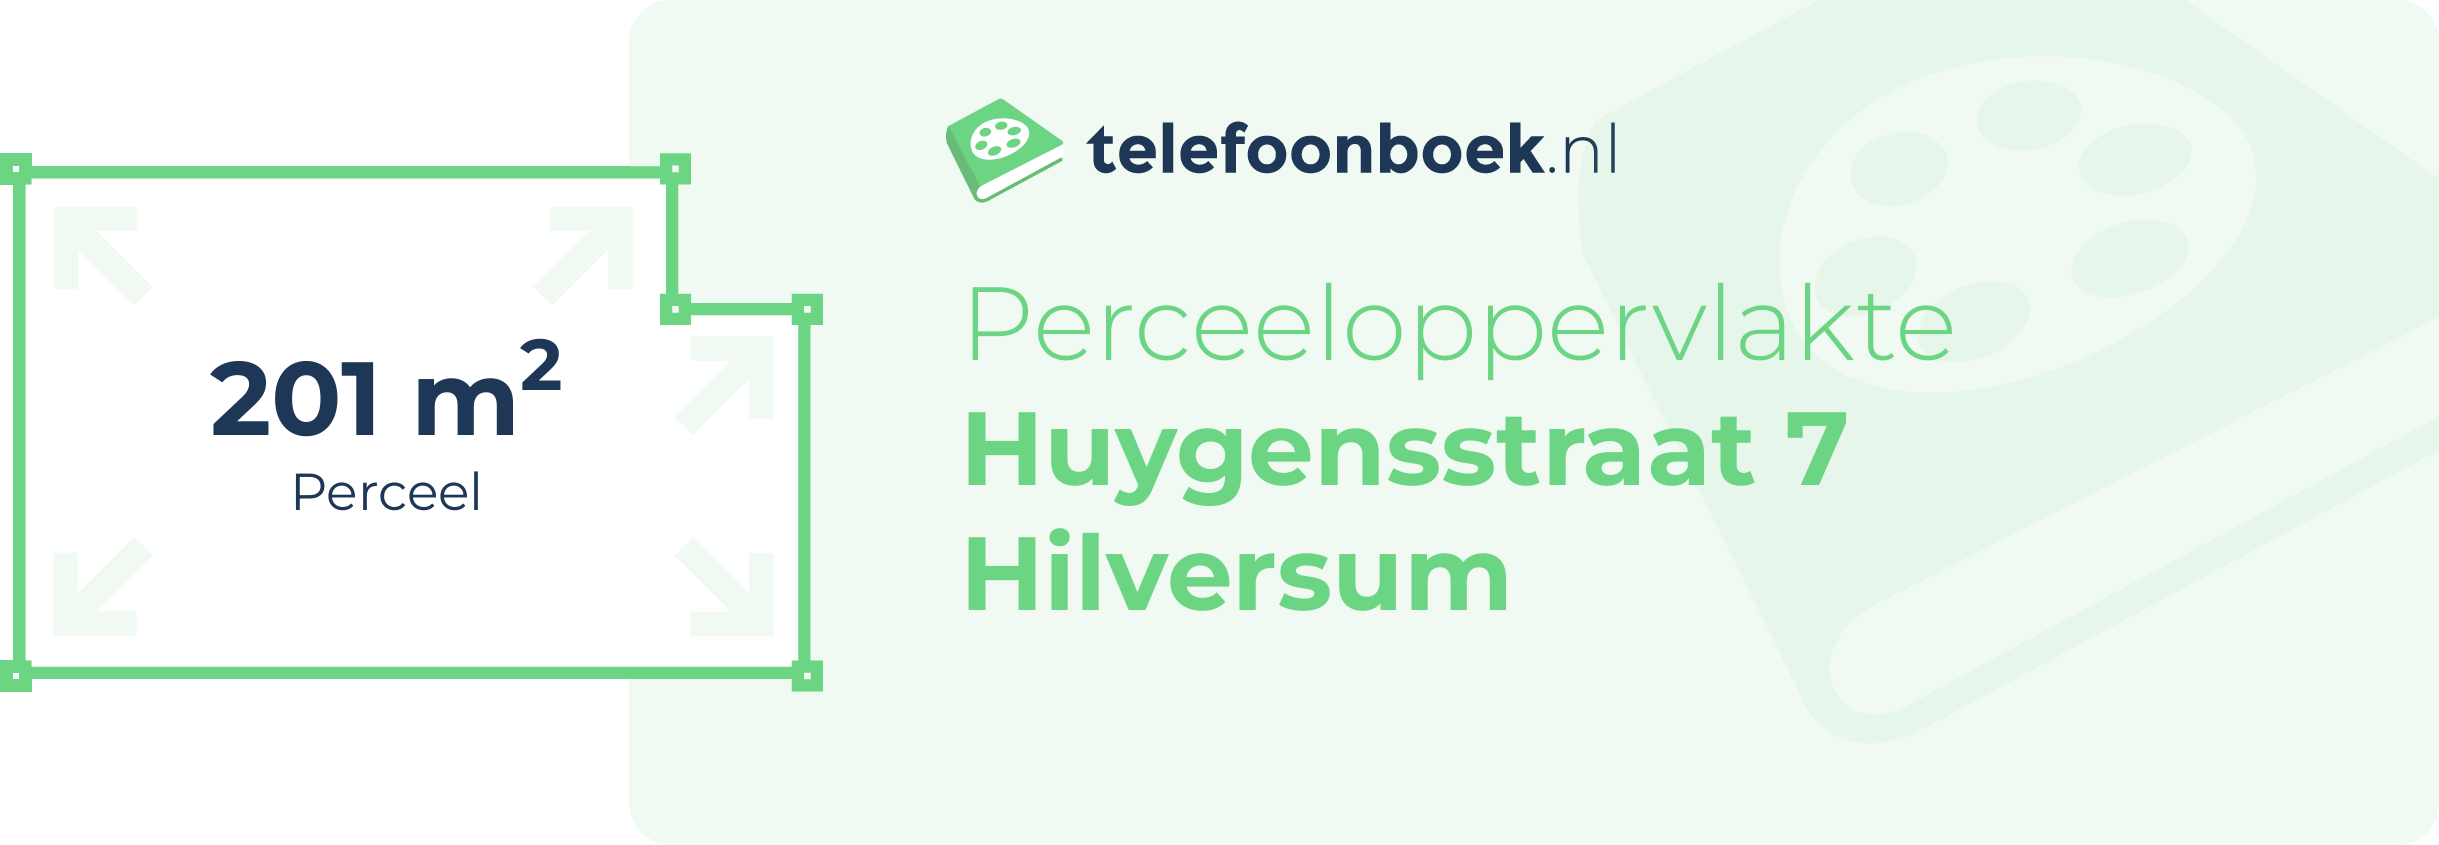 Perceeloppervlakte Huygensstraat 7 Hilversum